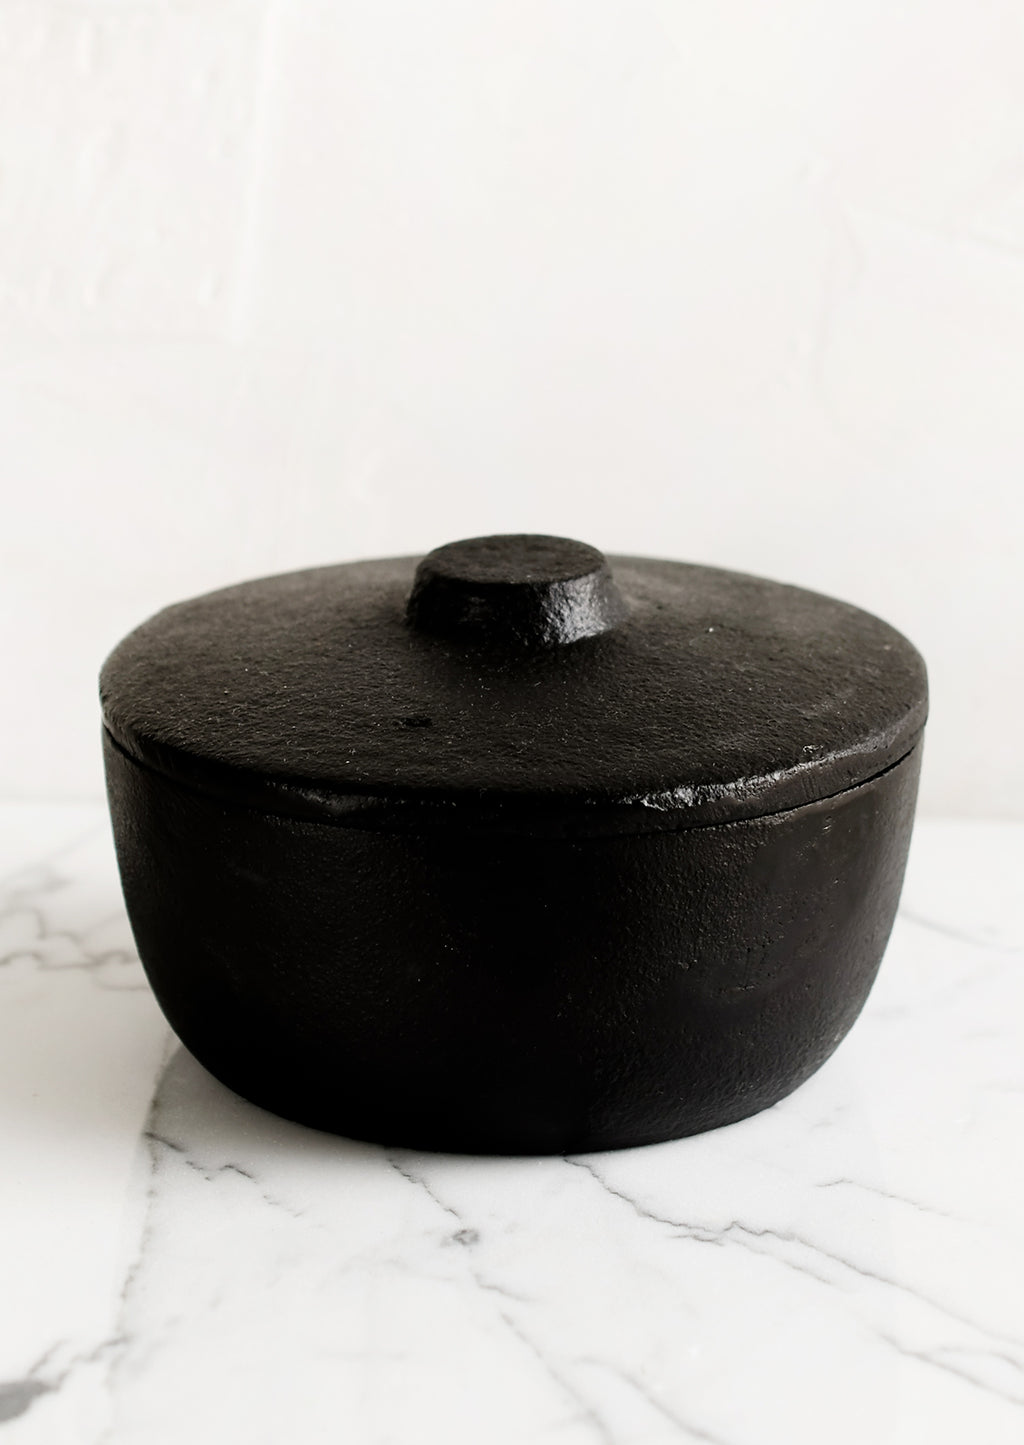 1: A black cast iron lidded storage jar.